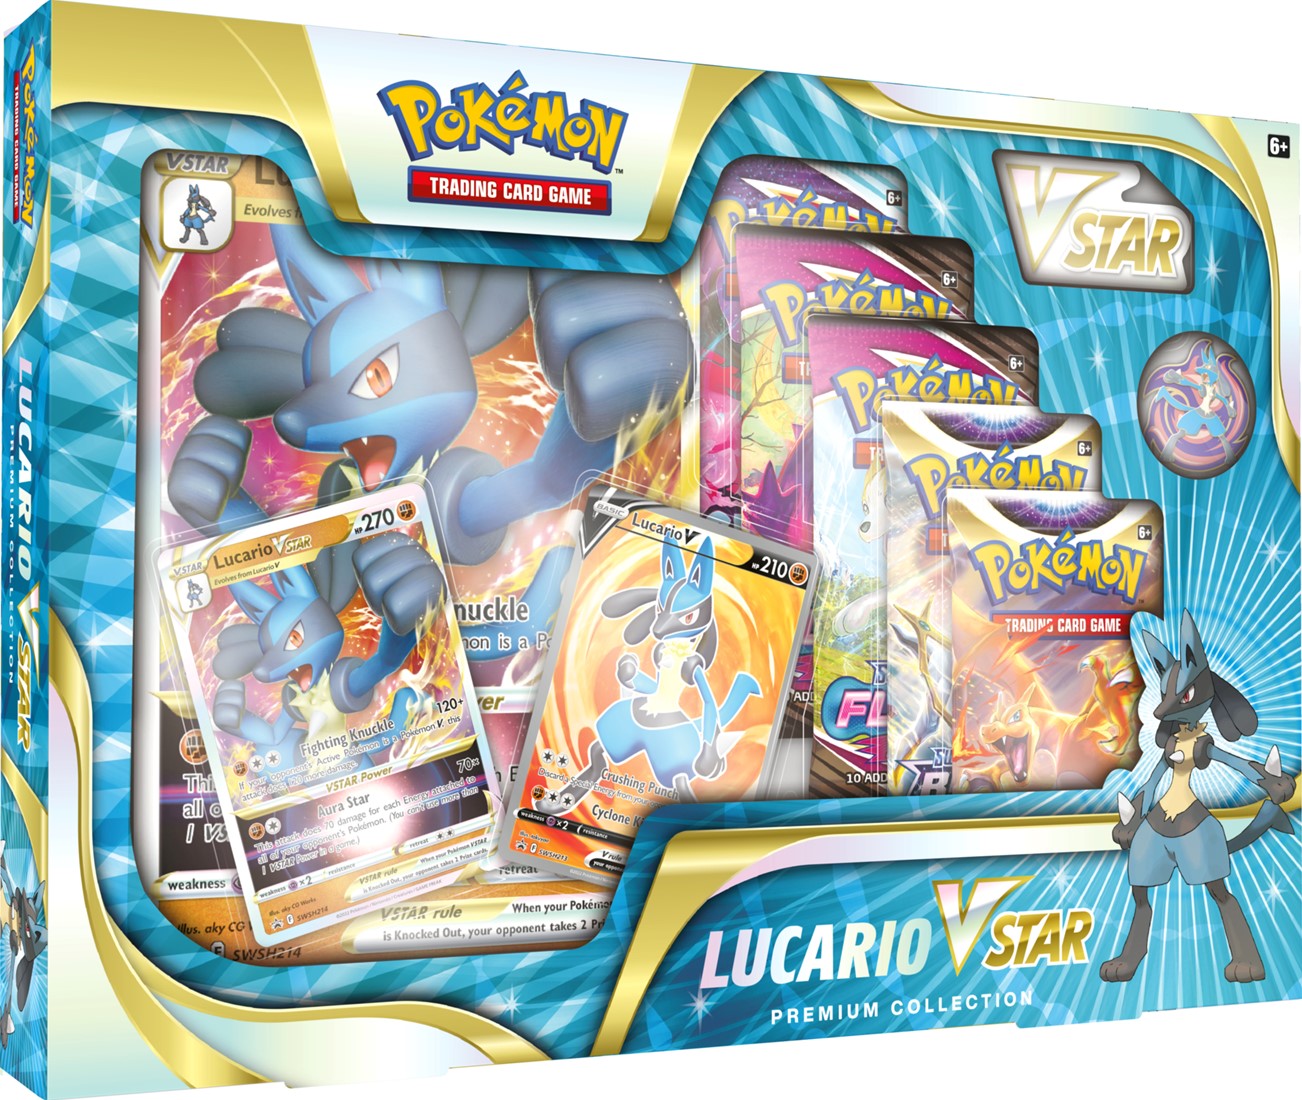 Pokemon Premium Collection Box: Lucario V Star (Pokemon), The Pokemon Company